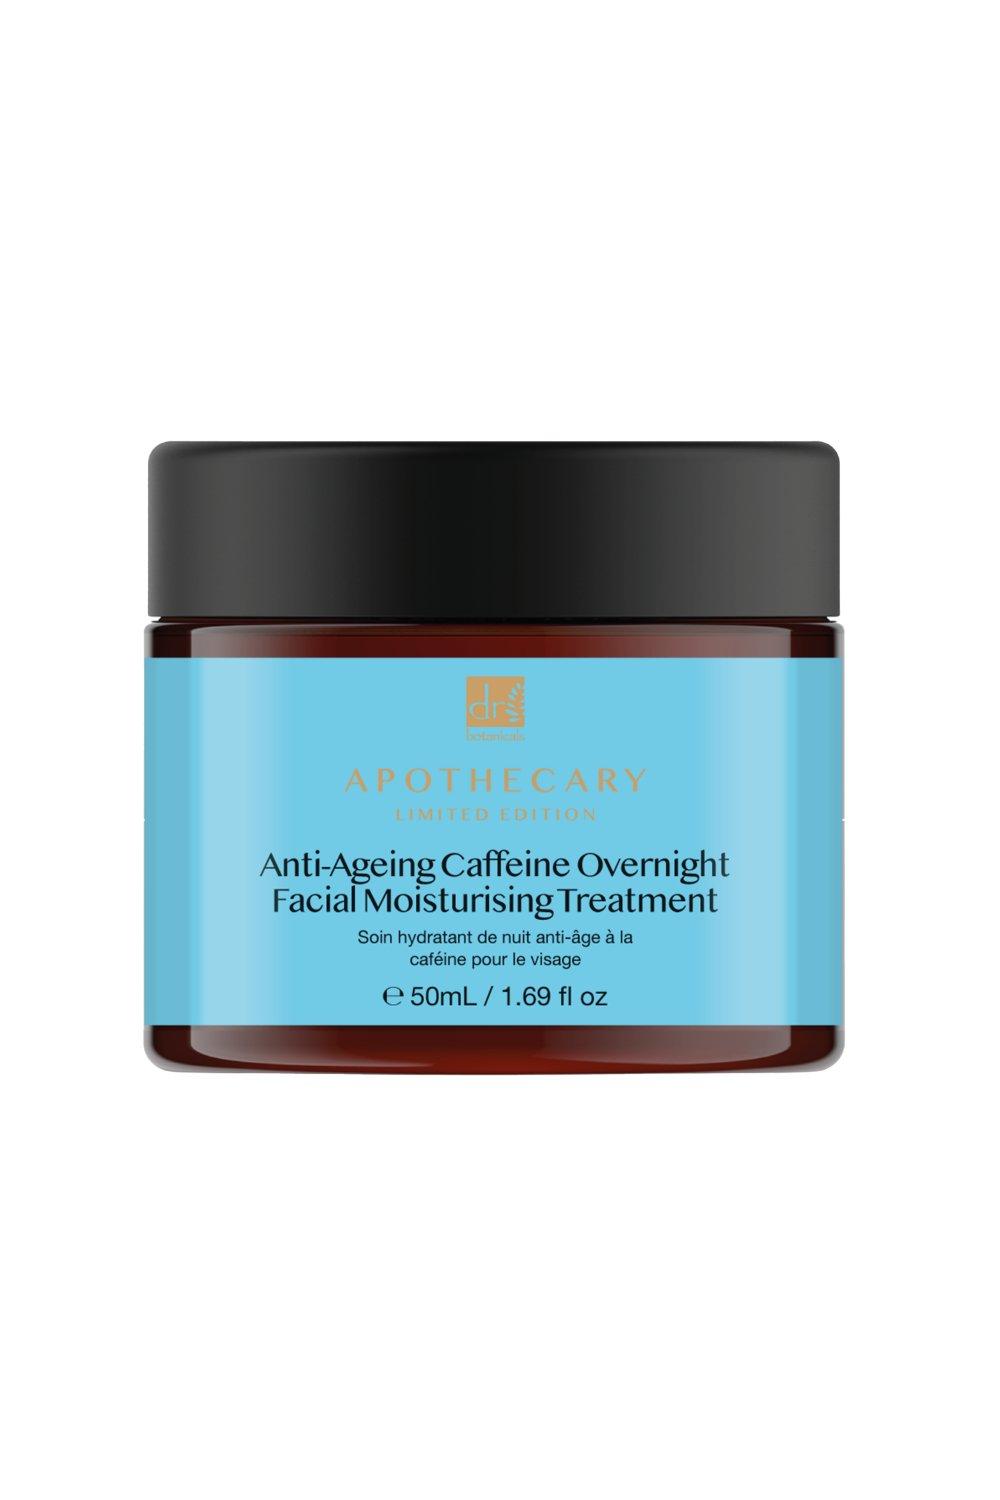 Anti-Ageing Caffeine Overnight Facial Moisturising Treatment 50ml